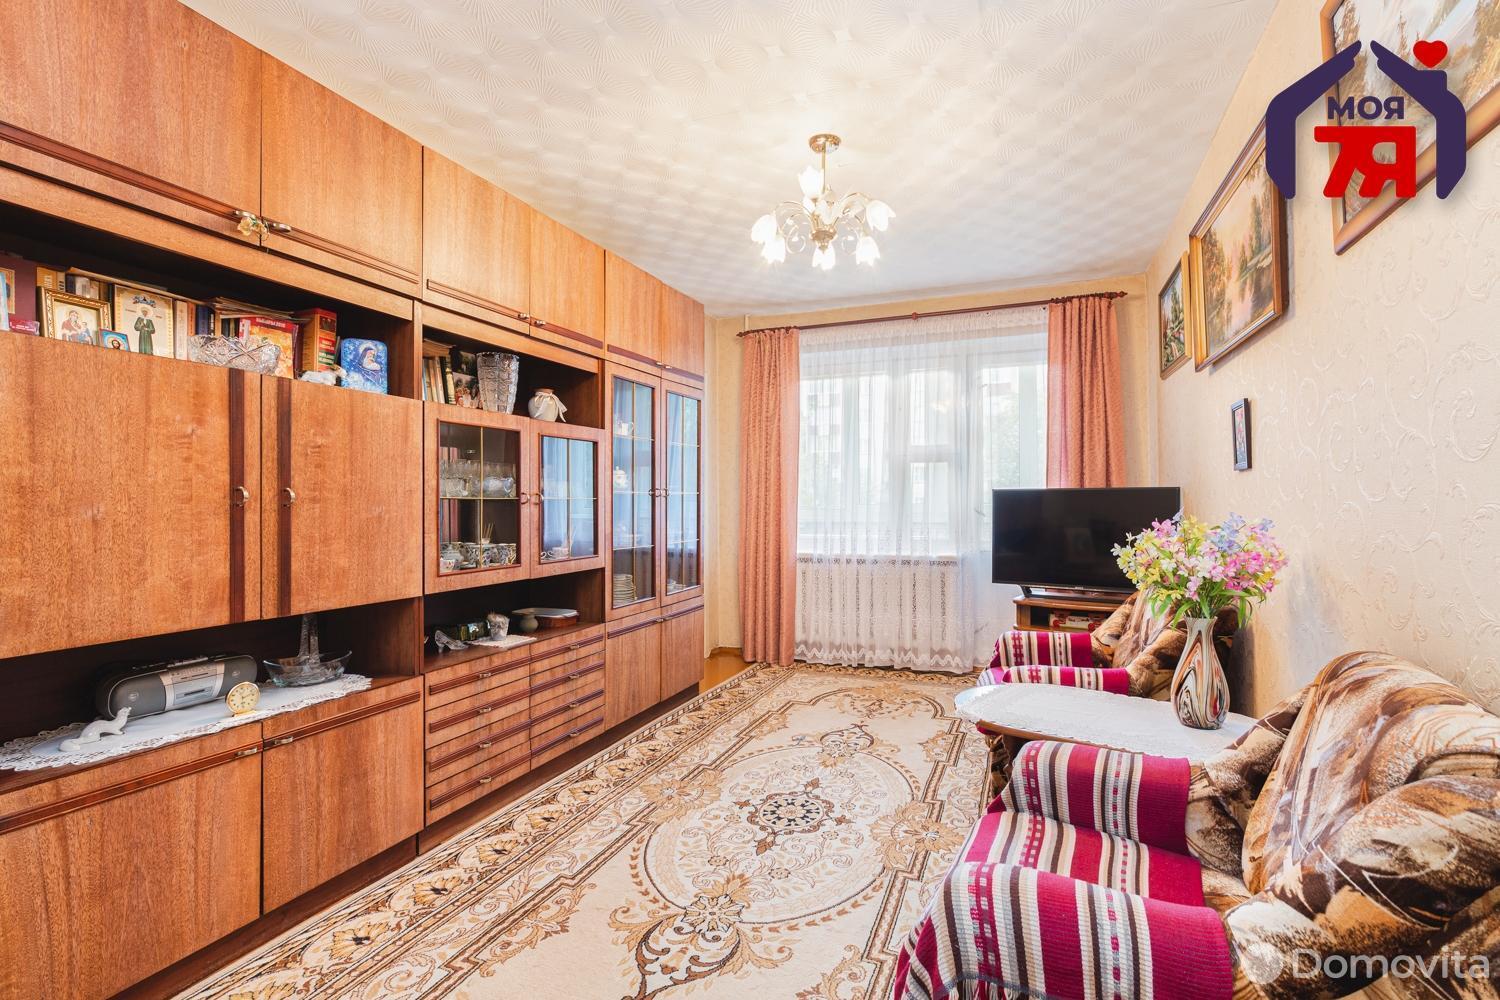 квартира, Минск, ул. Матусевича, д. 6, стоимость продажи 185 870 р.